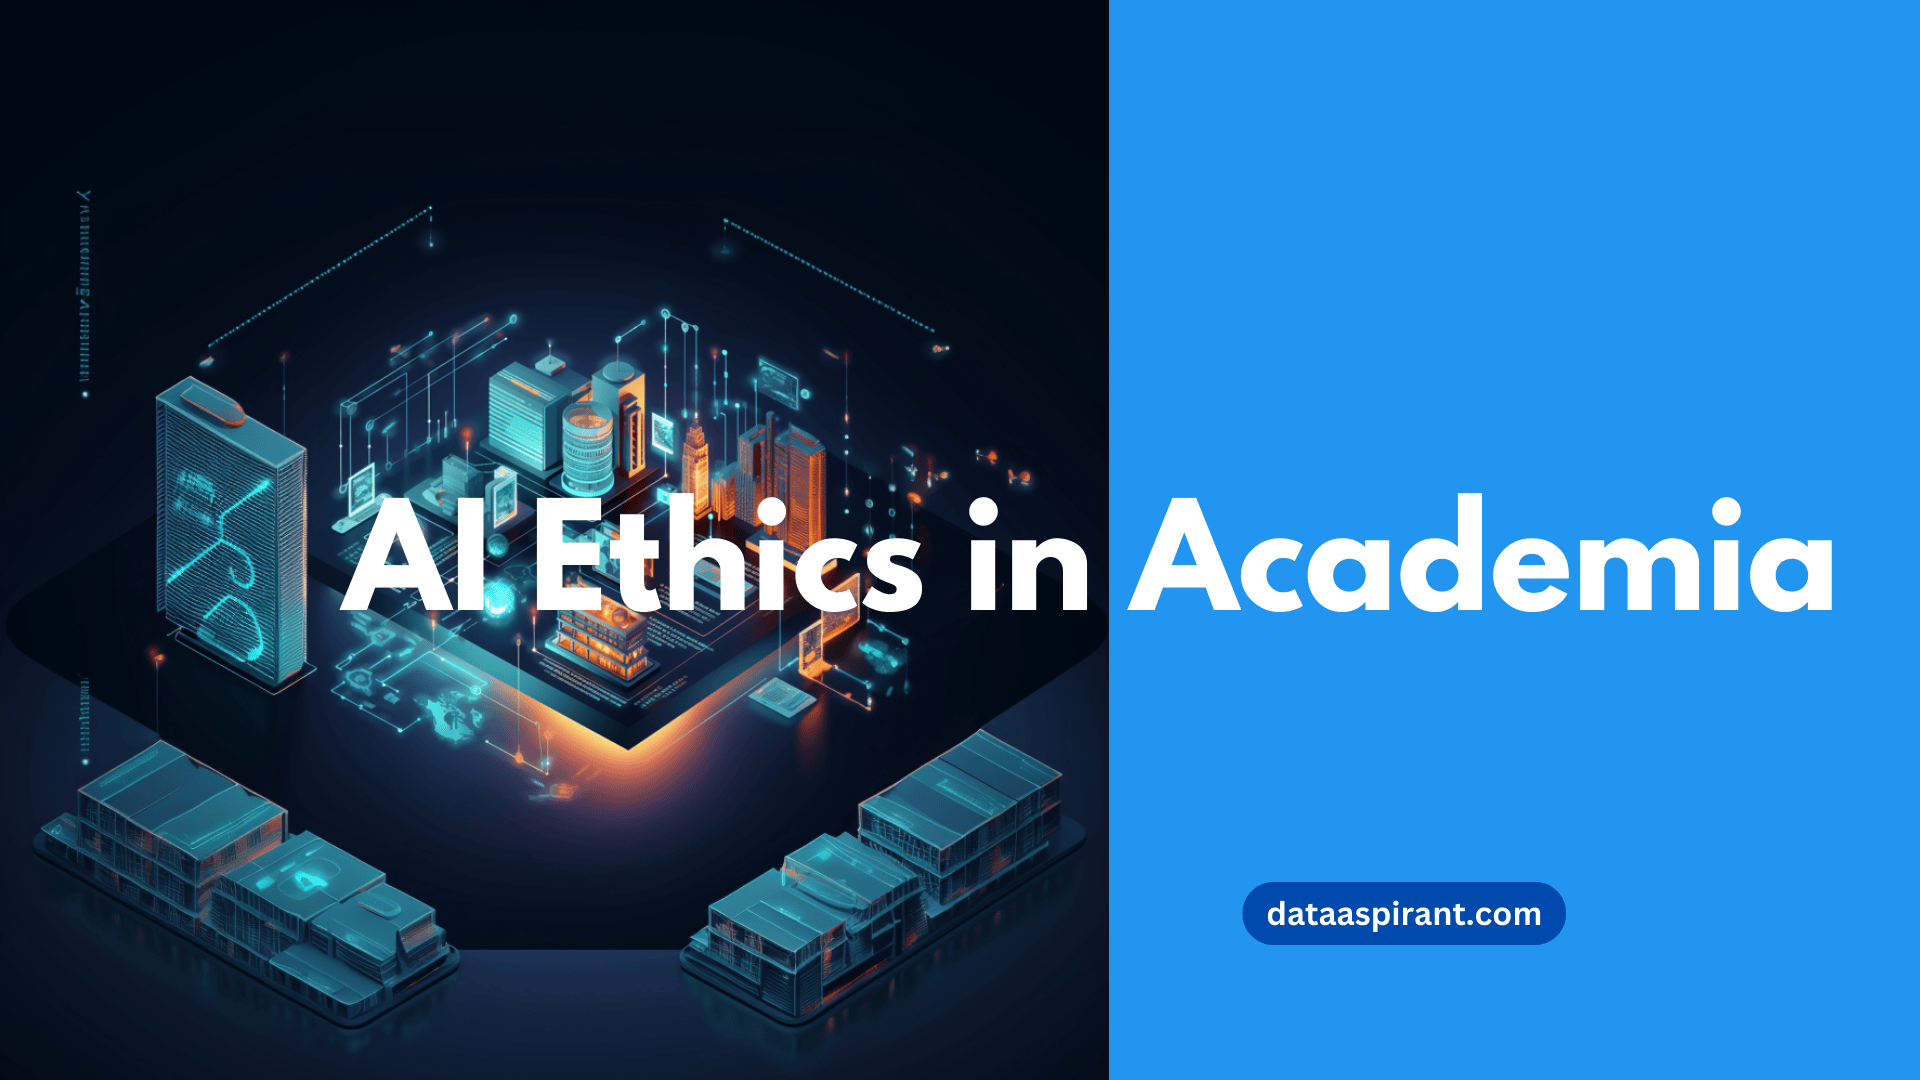 AI Ethics in Academia